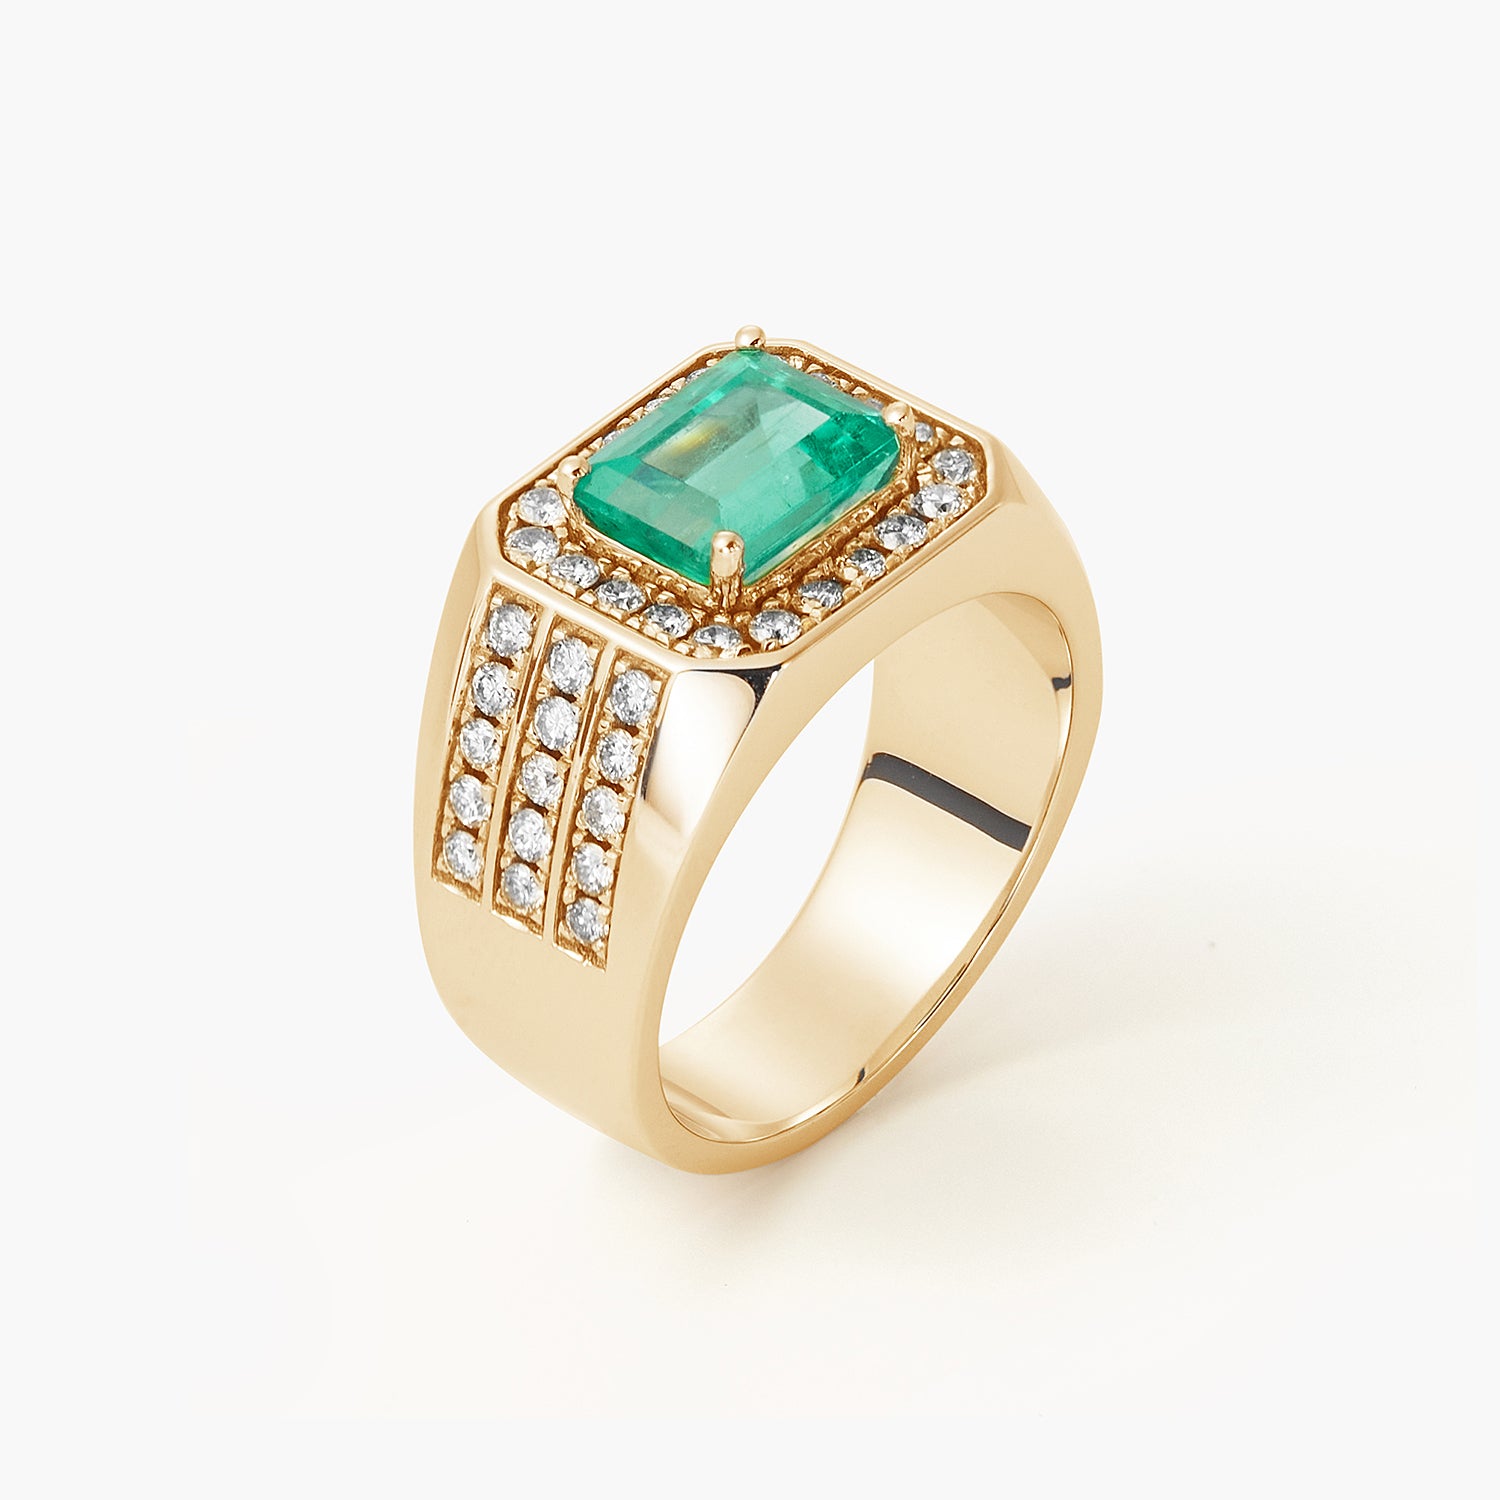 Buy Green Emerald (Panna) Rings Online at Best Price | GemPundit